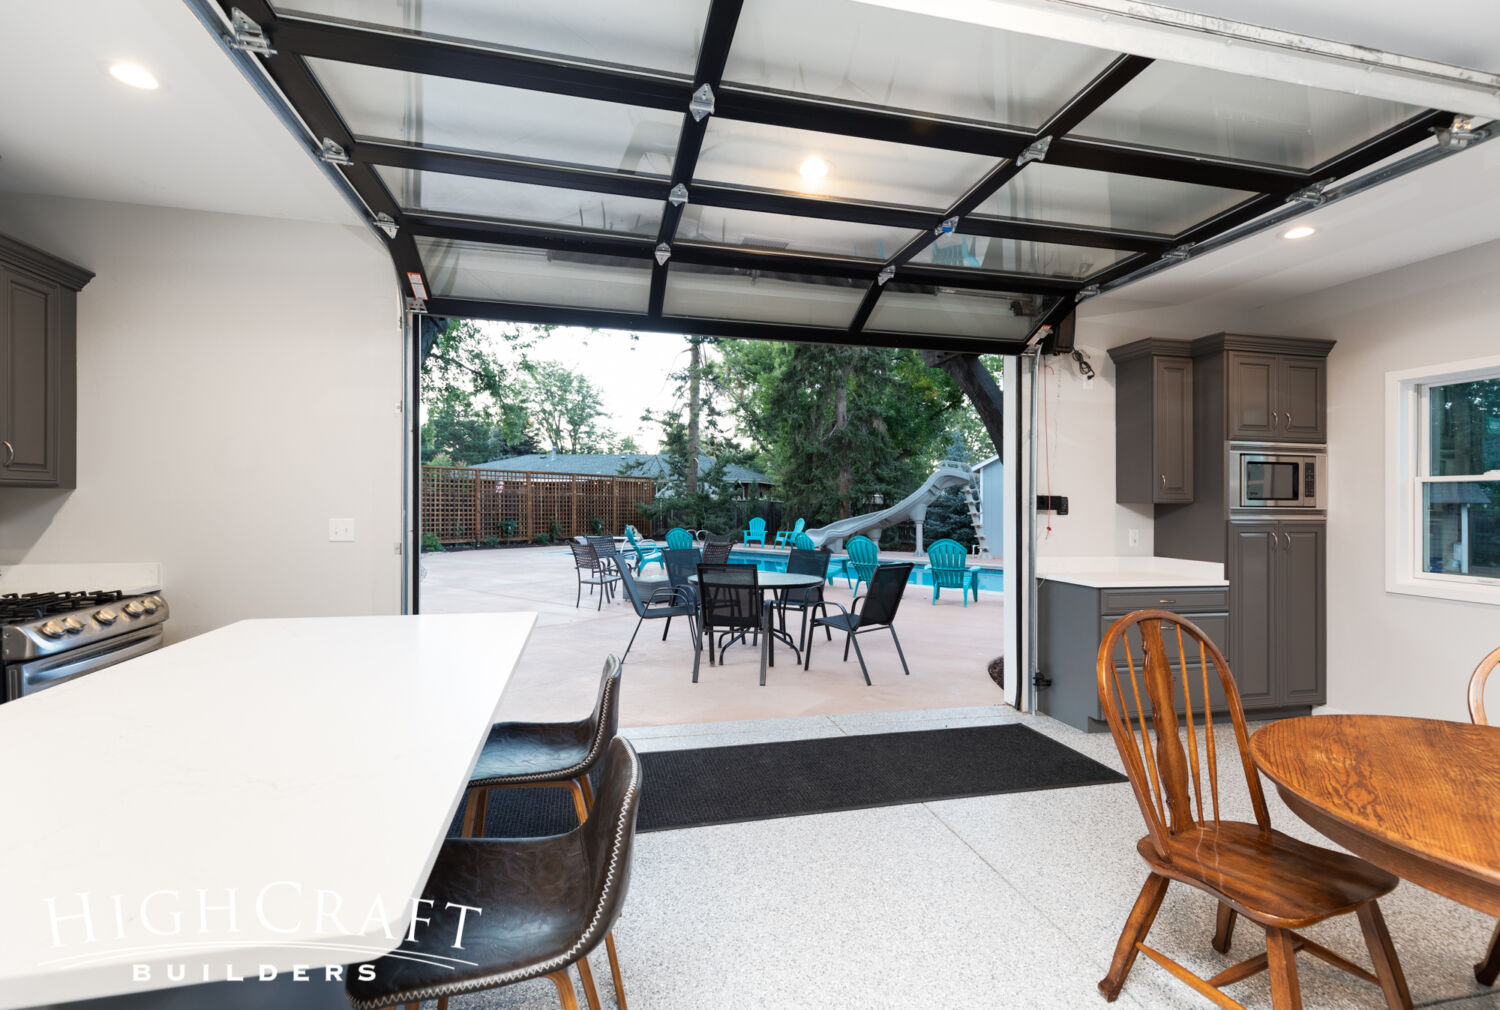 Kitchen-Bath-Pool-House-epoxy-flooring-glass-paneled-garage-door-pool-deck